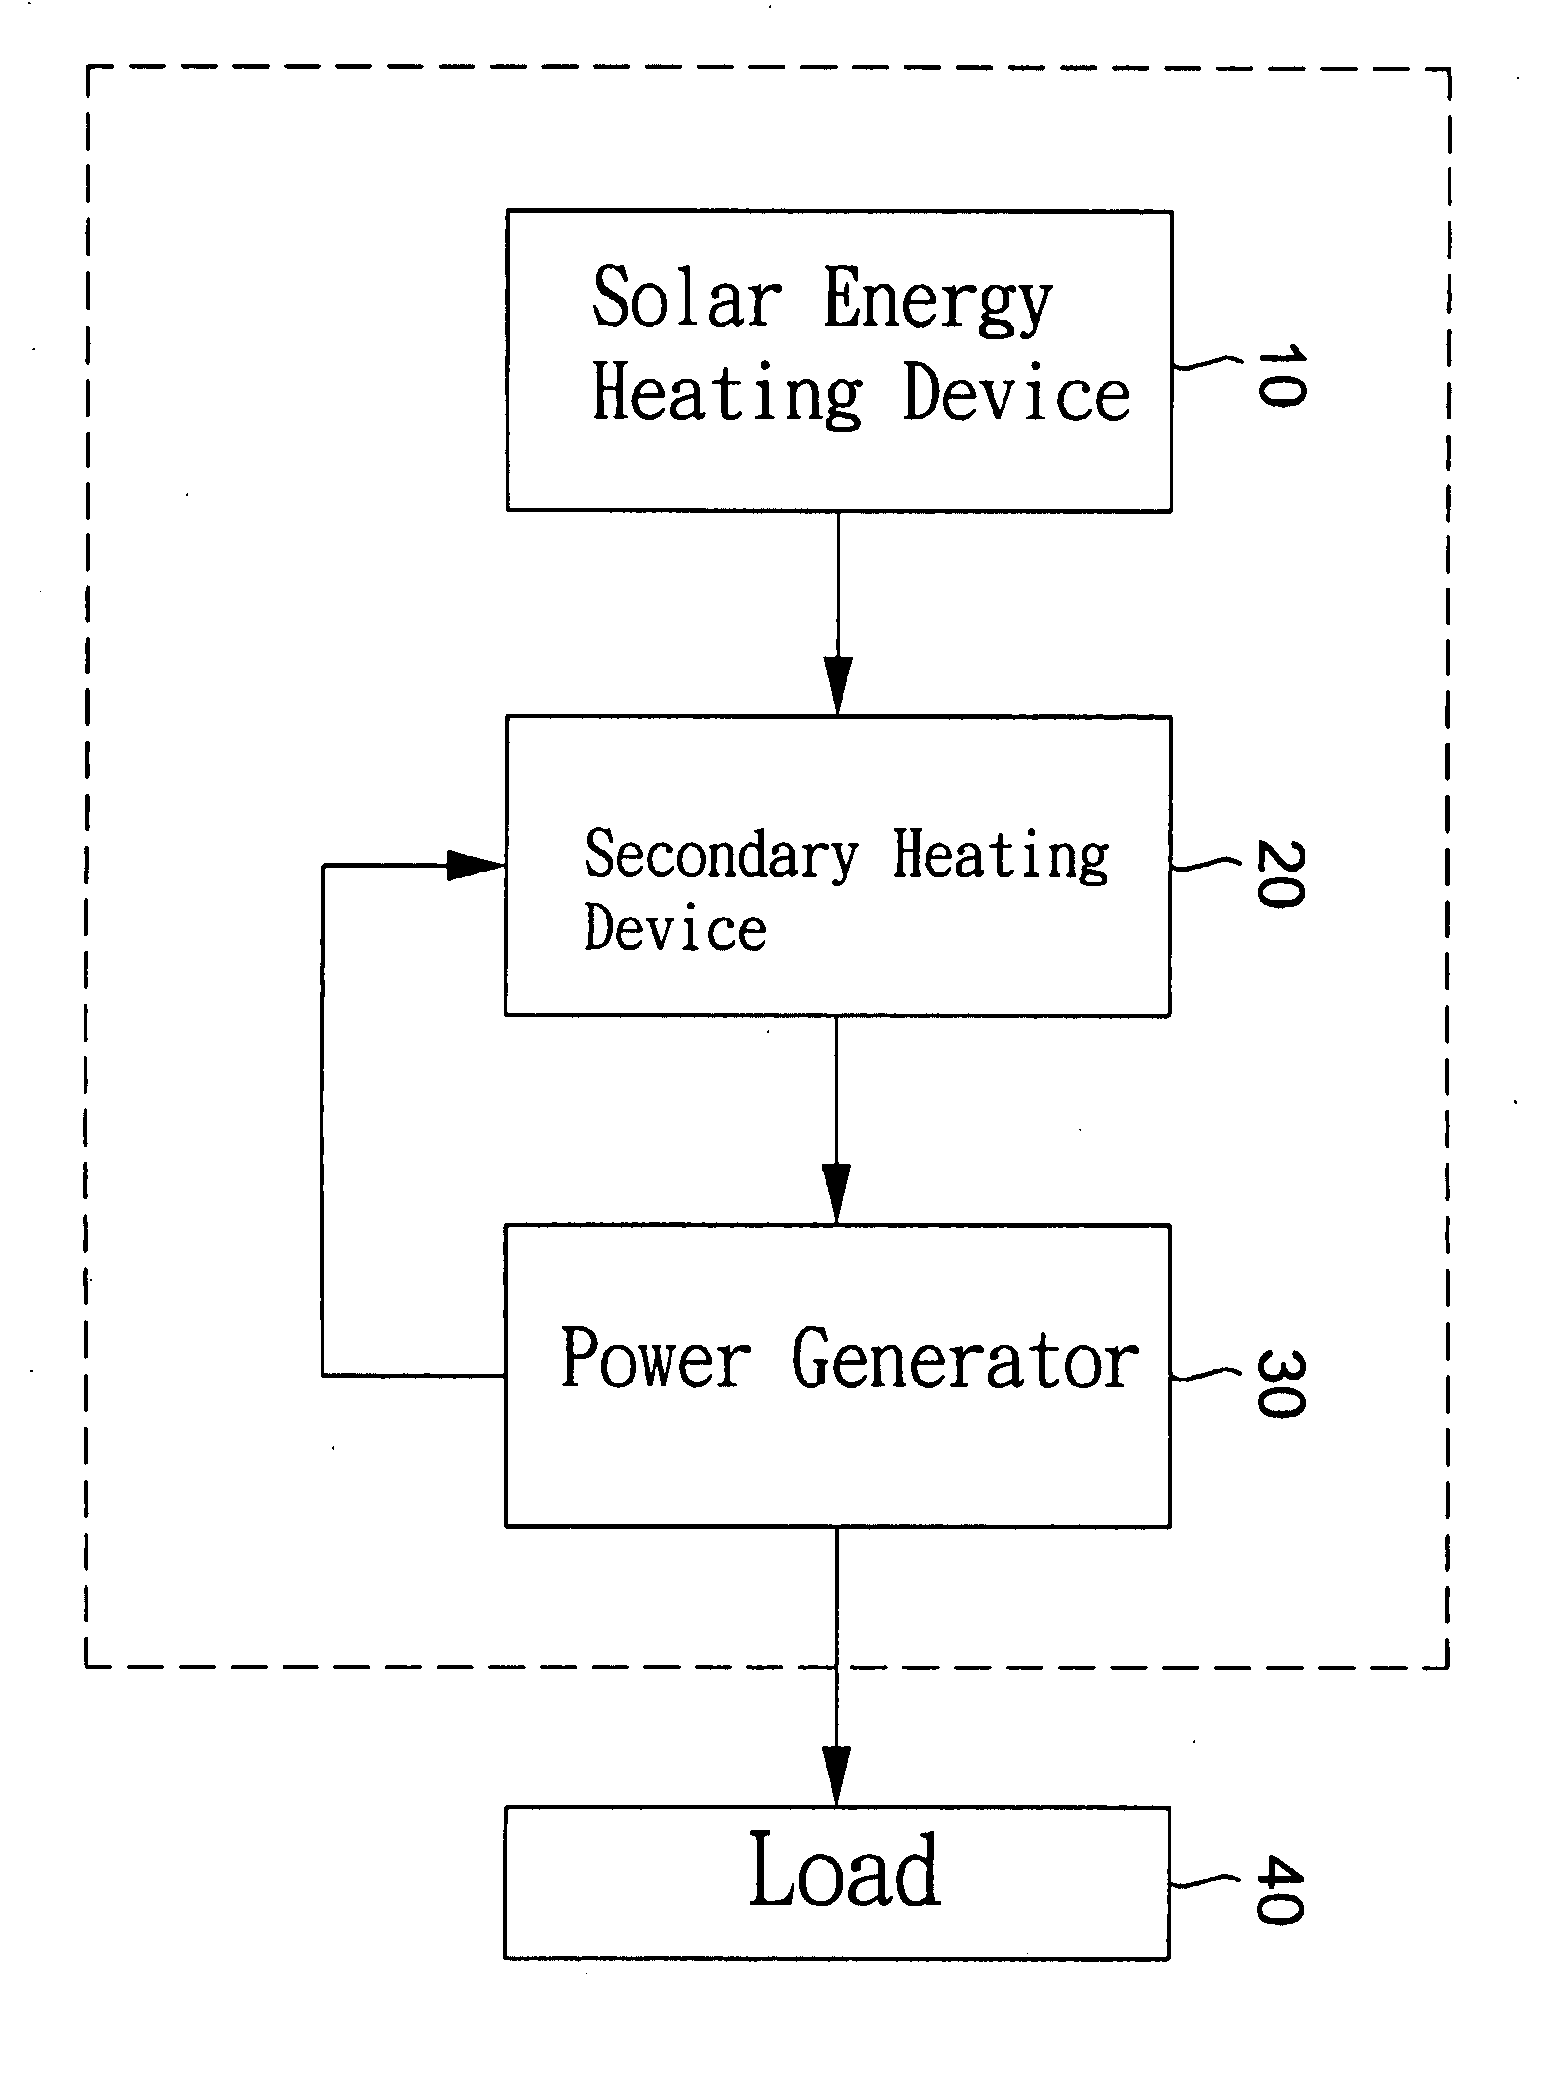 Solar energy power generator